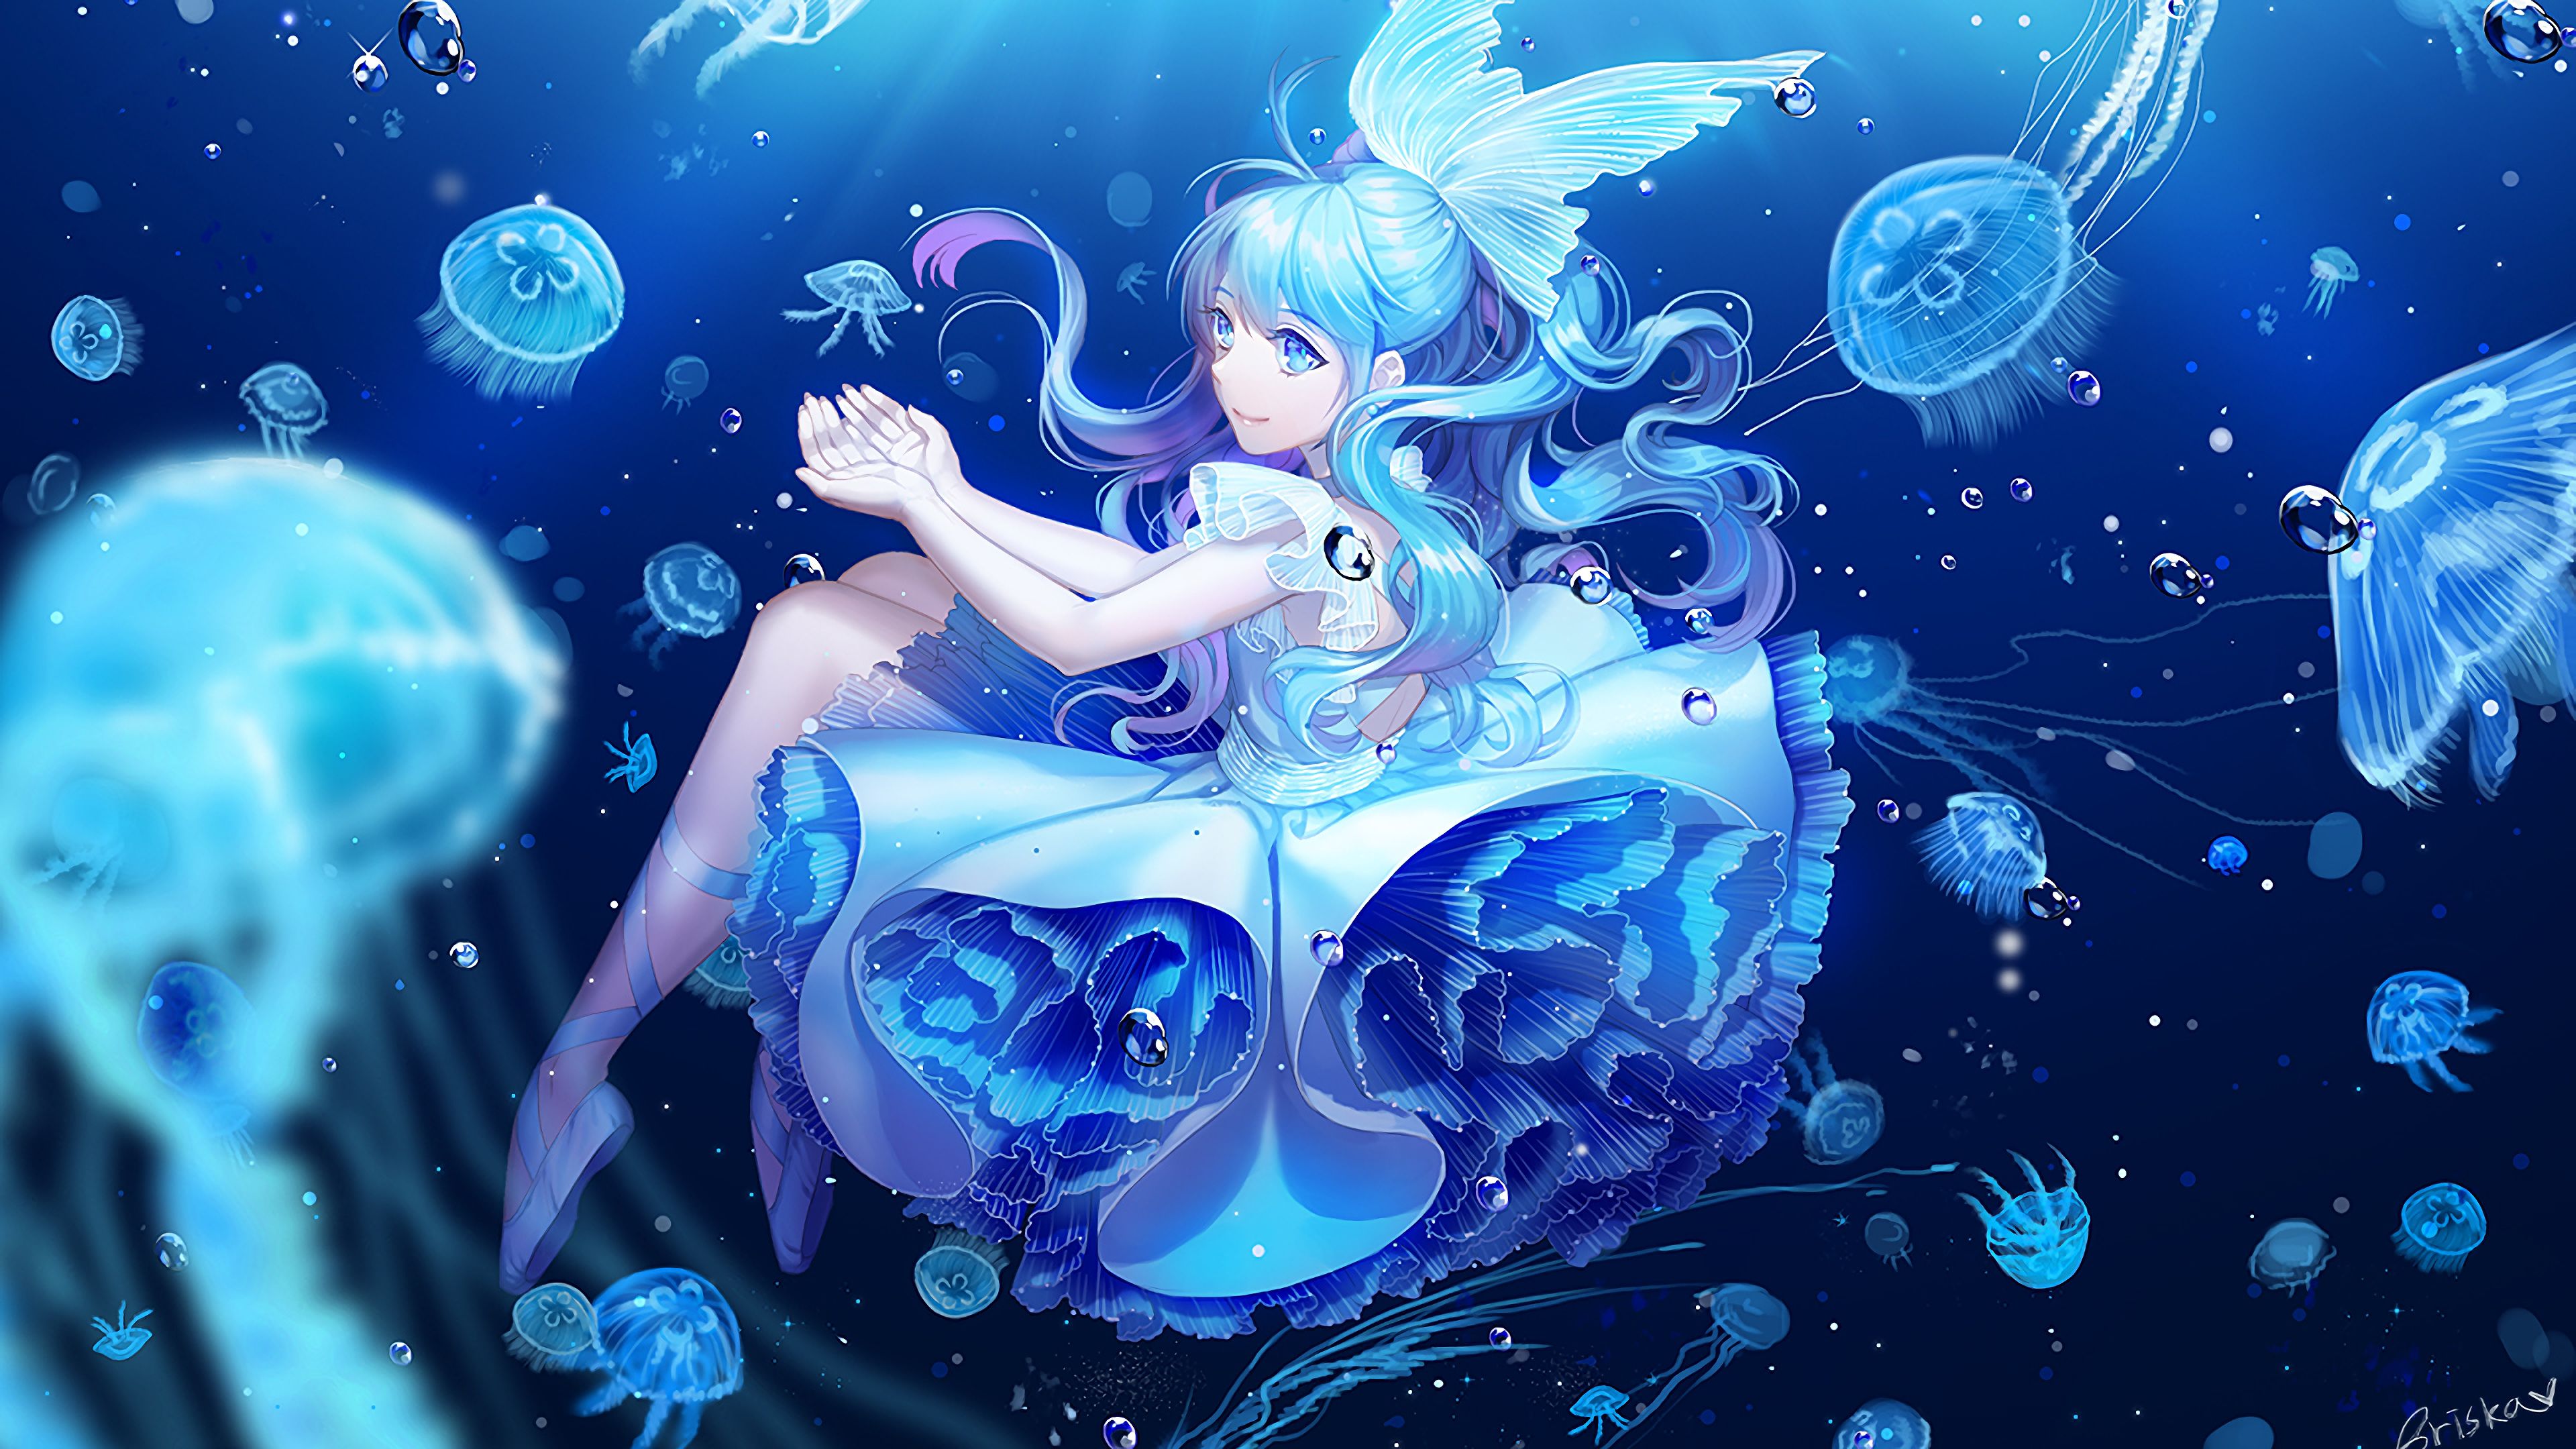 Another random anime girl swimming underwater by stephdumas on DeviantArt